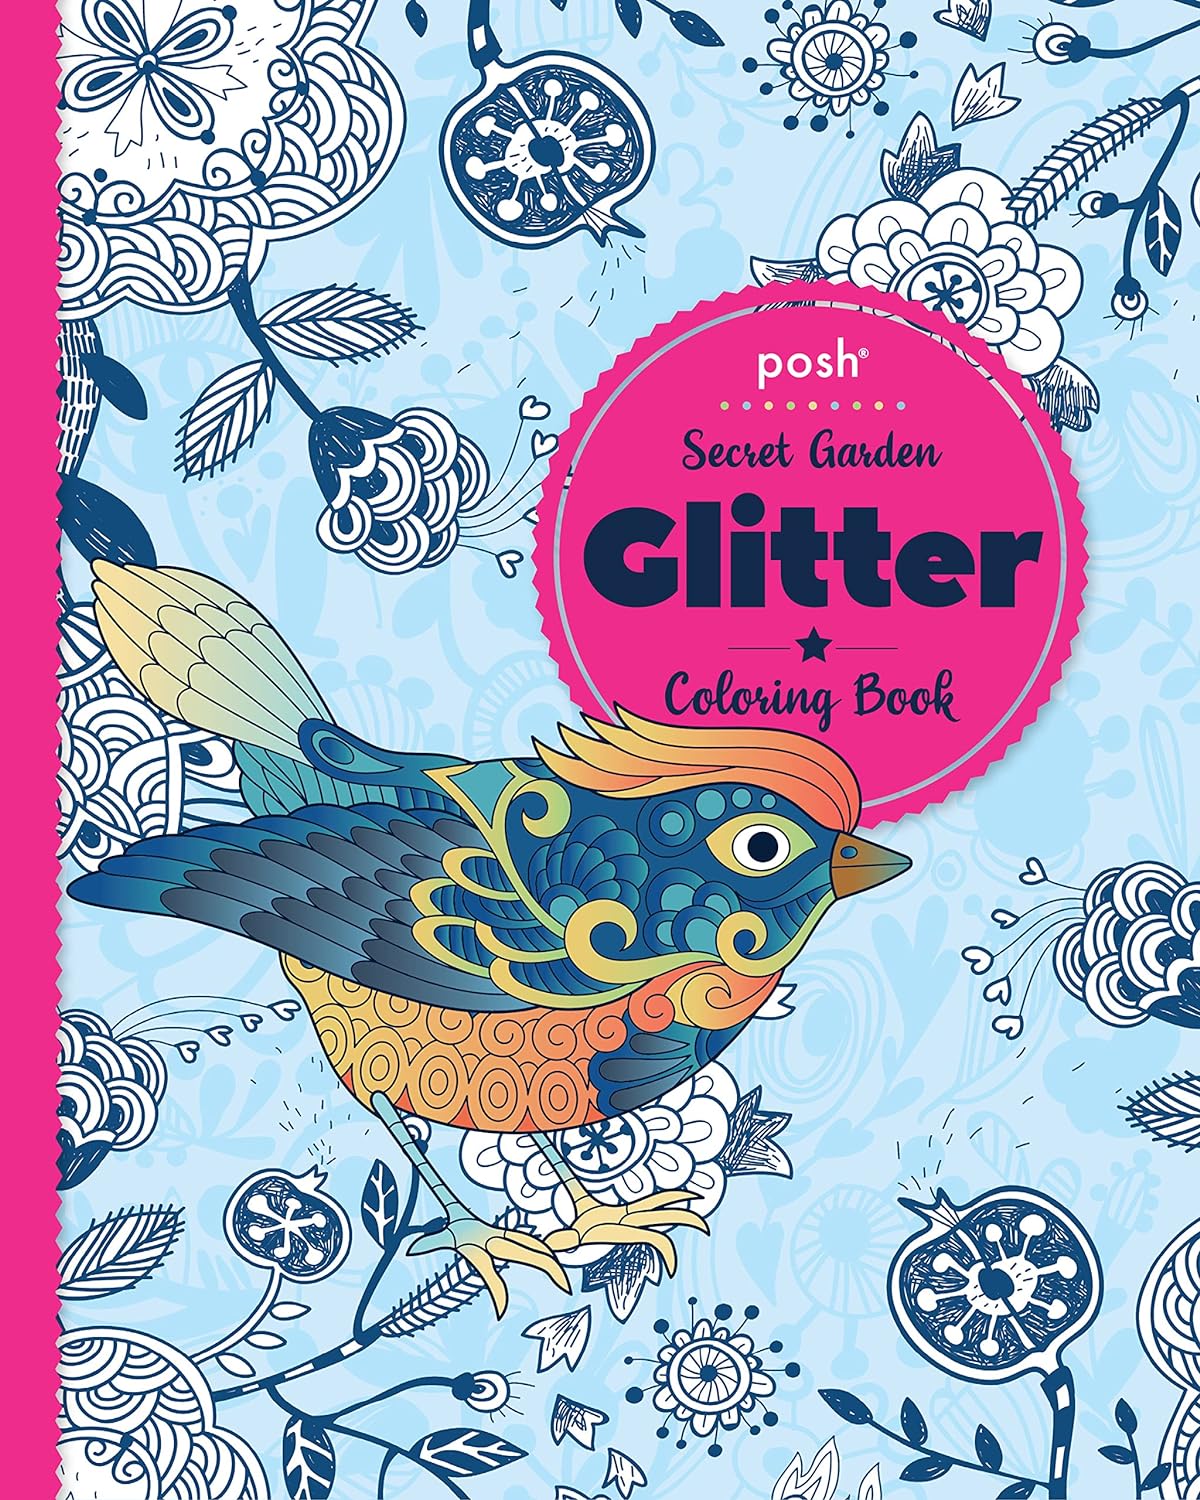 Posh Glitter Coloring Book: Secret Garden